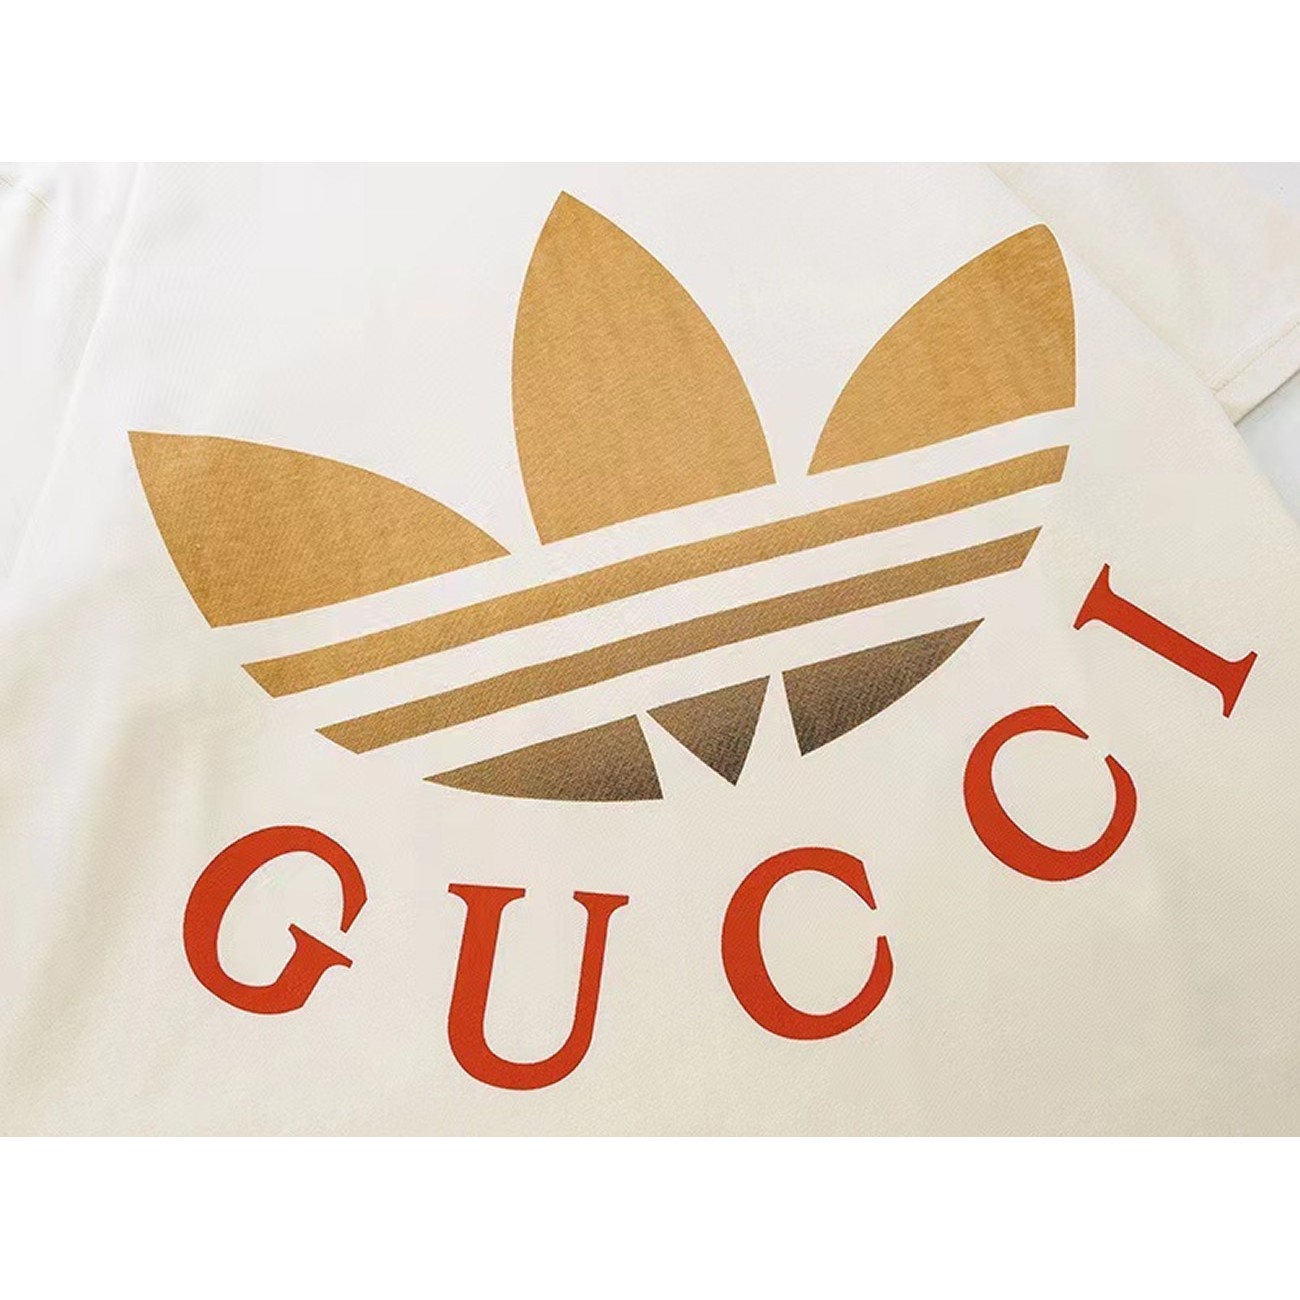 Gucci x adidas Cotton Jersey T-Shirt